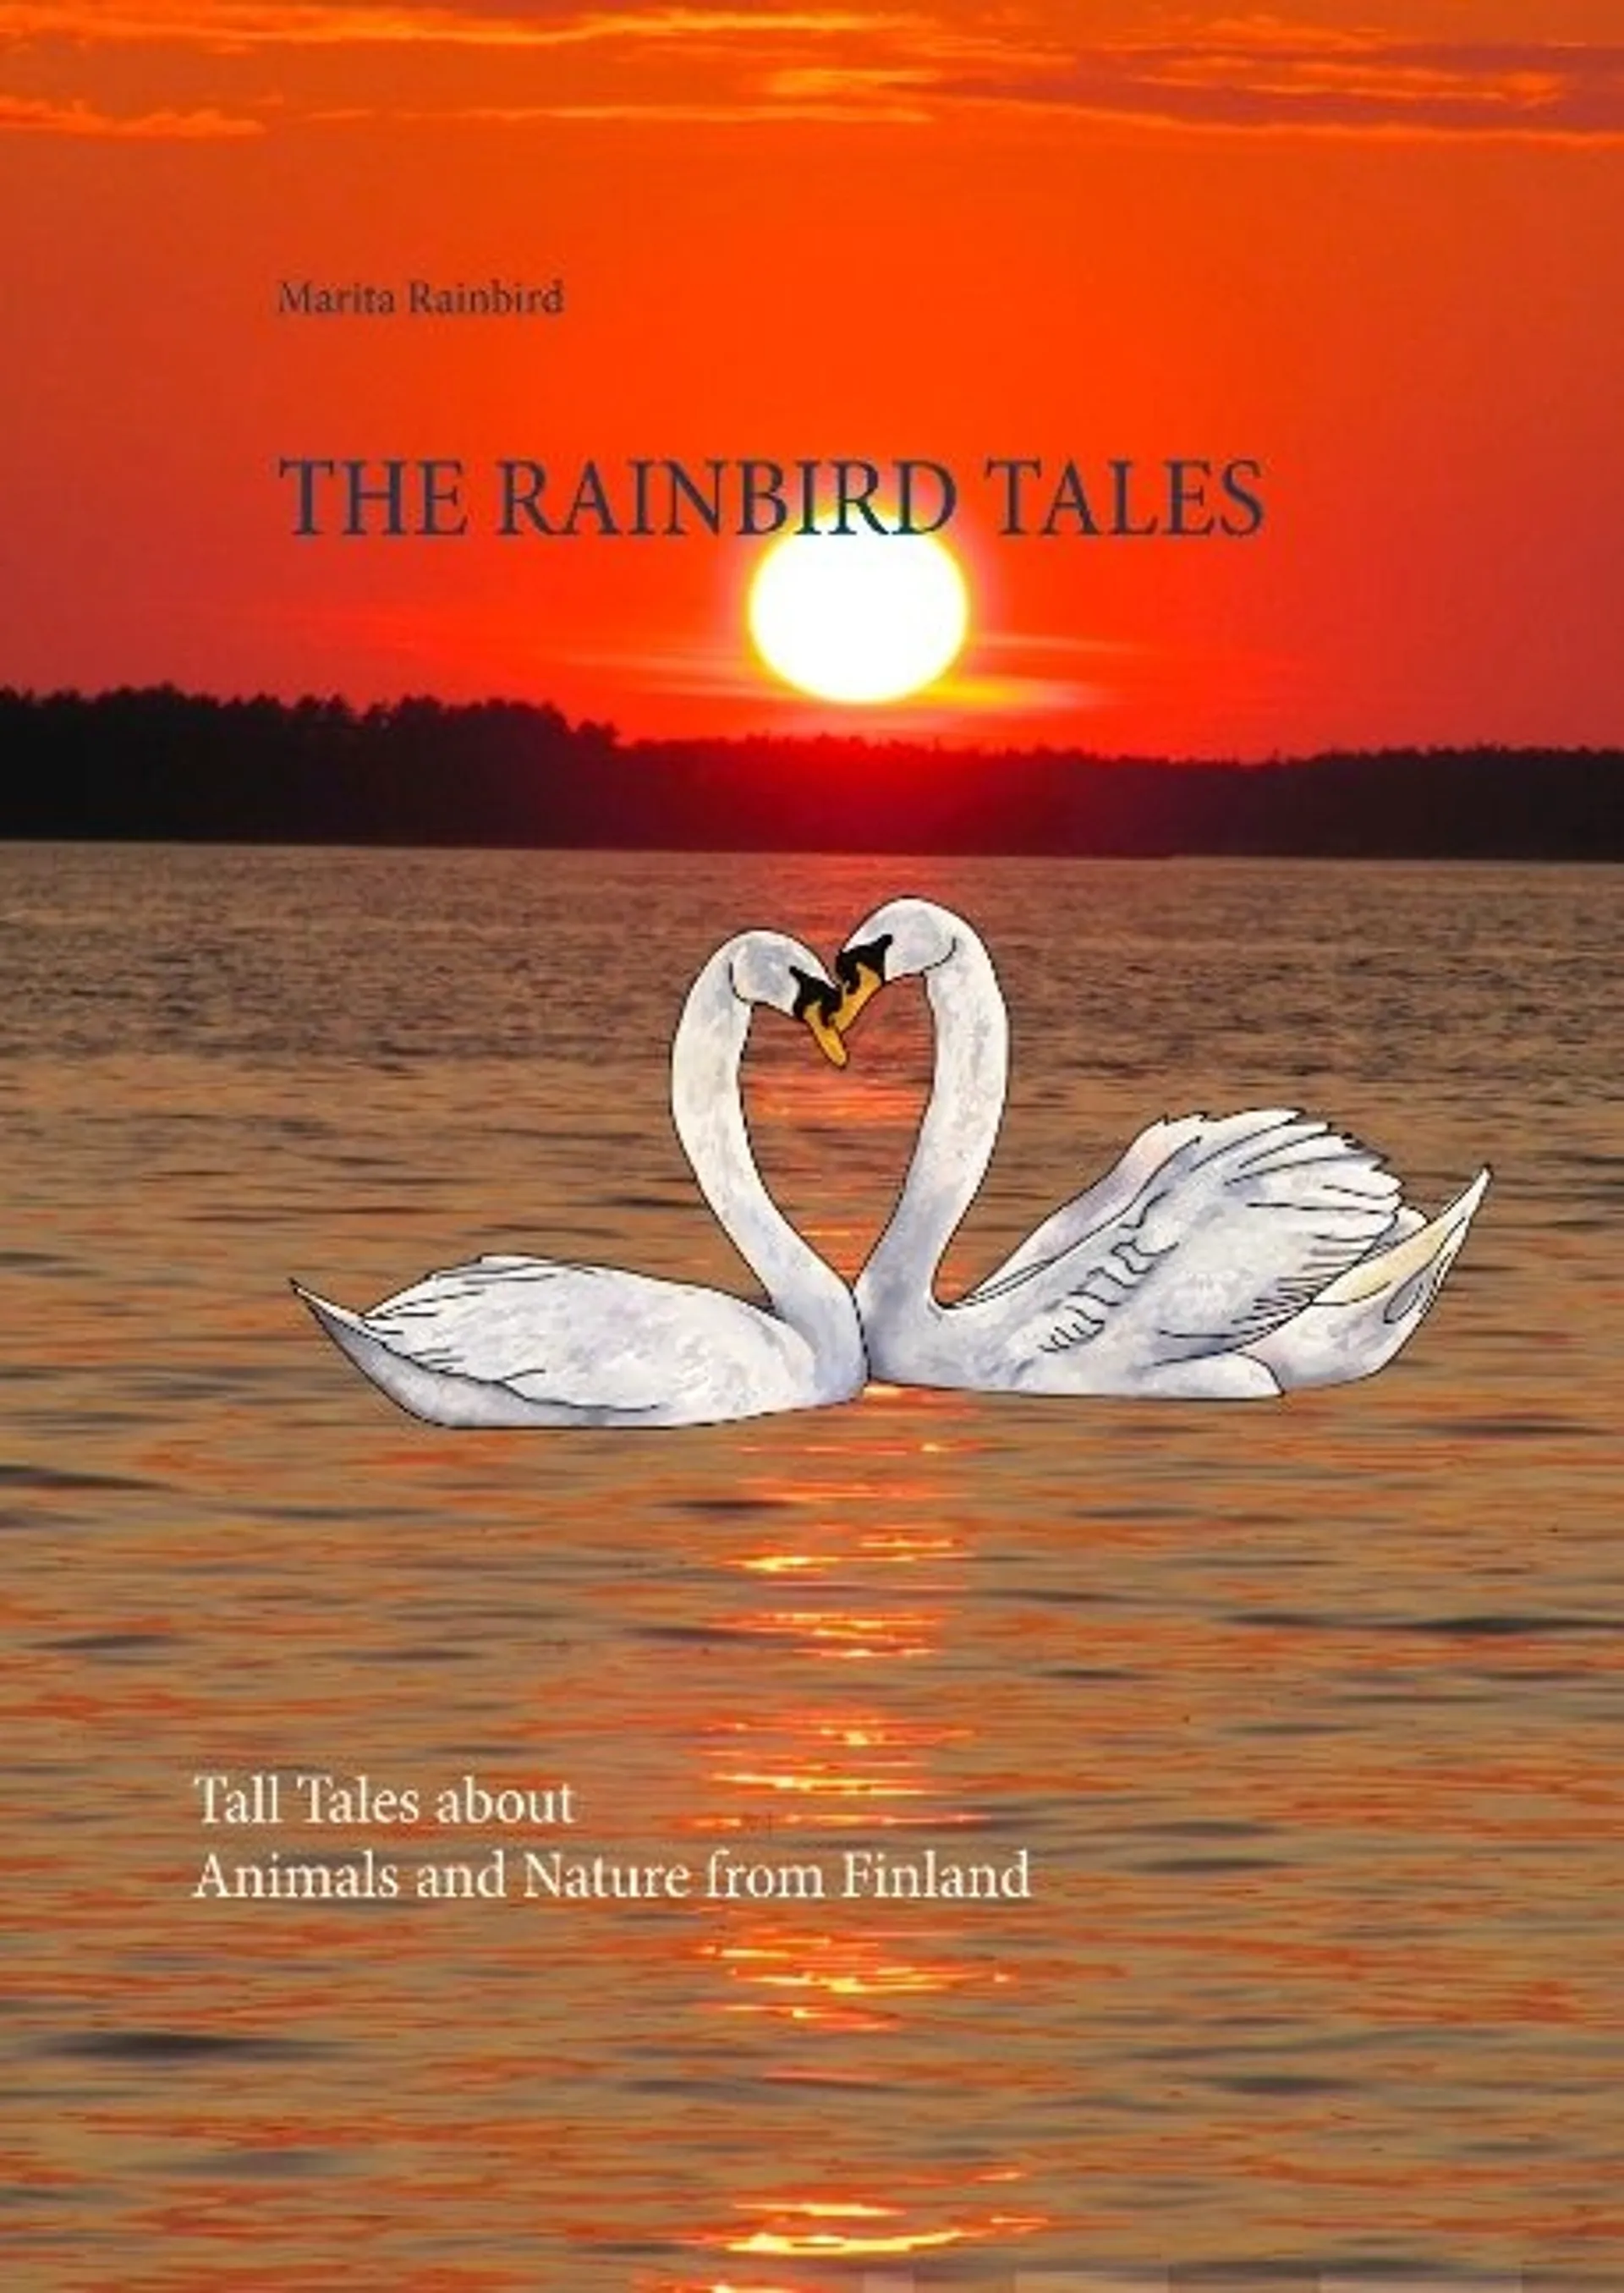 Rainbird, The Rainbird Tales